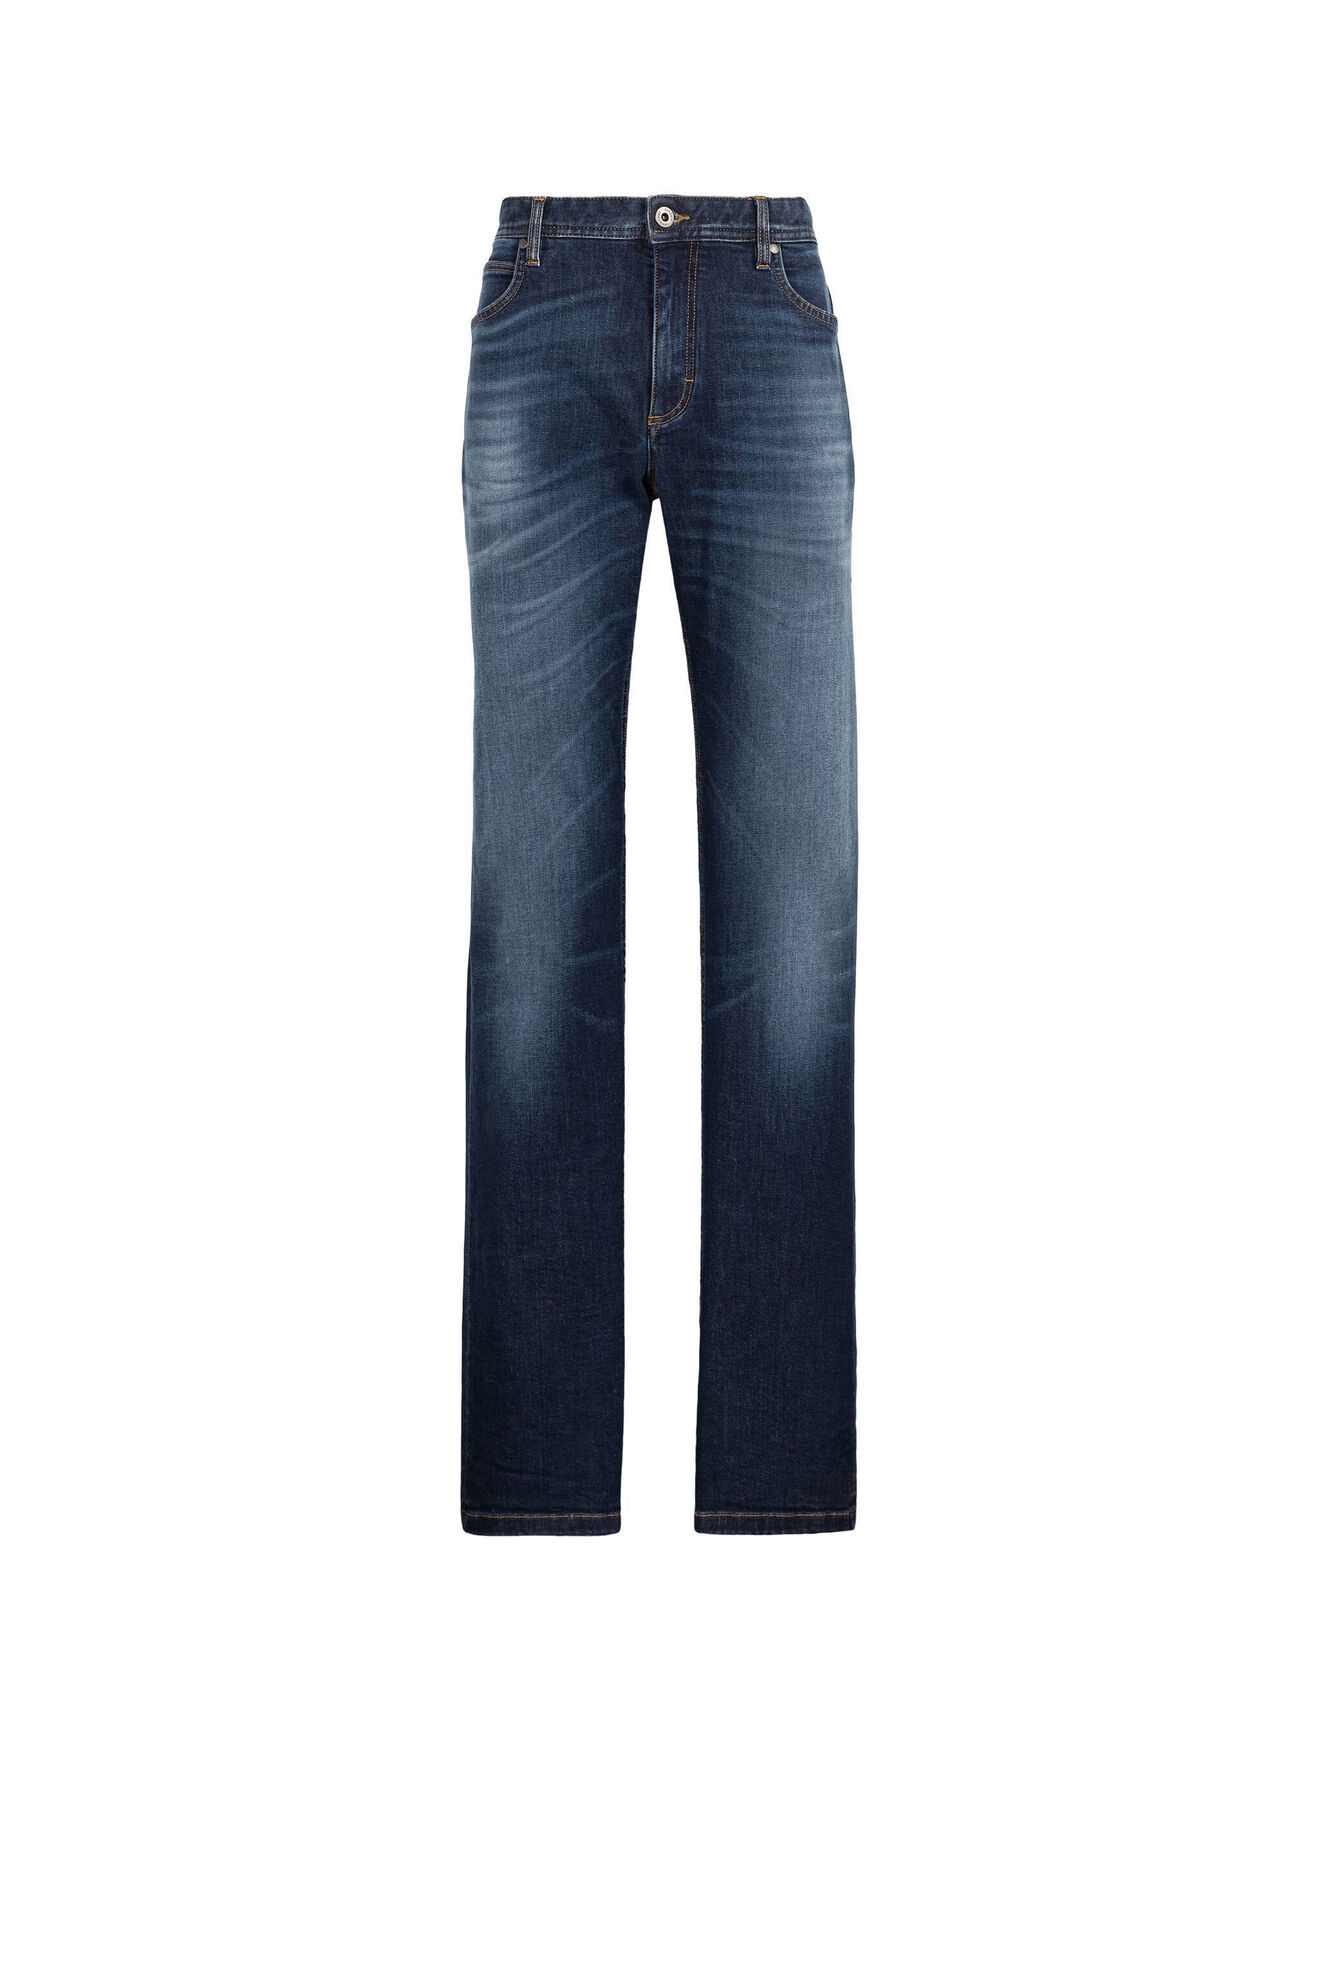 Straight-Leg Jeans, BLU SCURO 193921, Sale